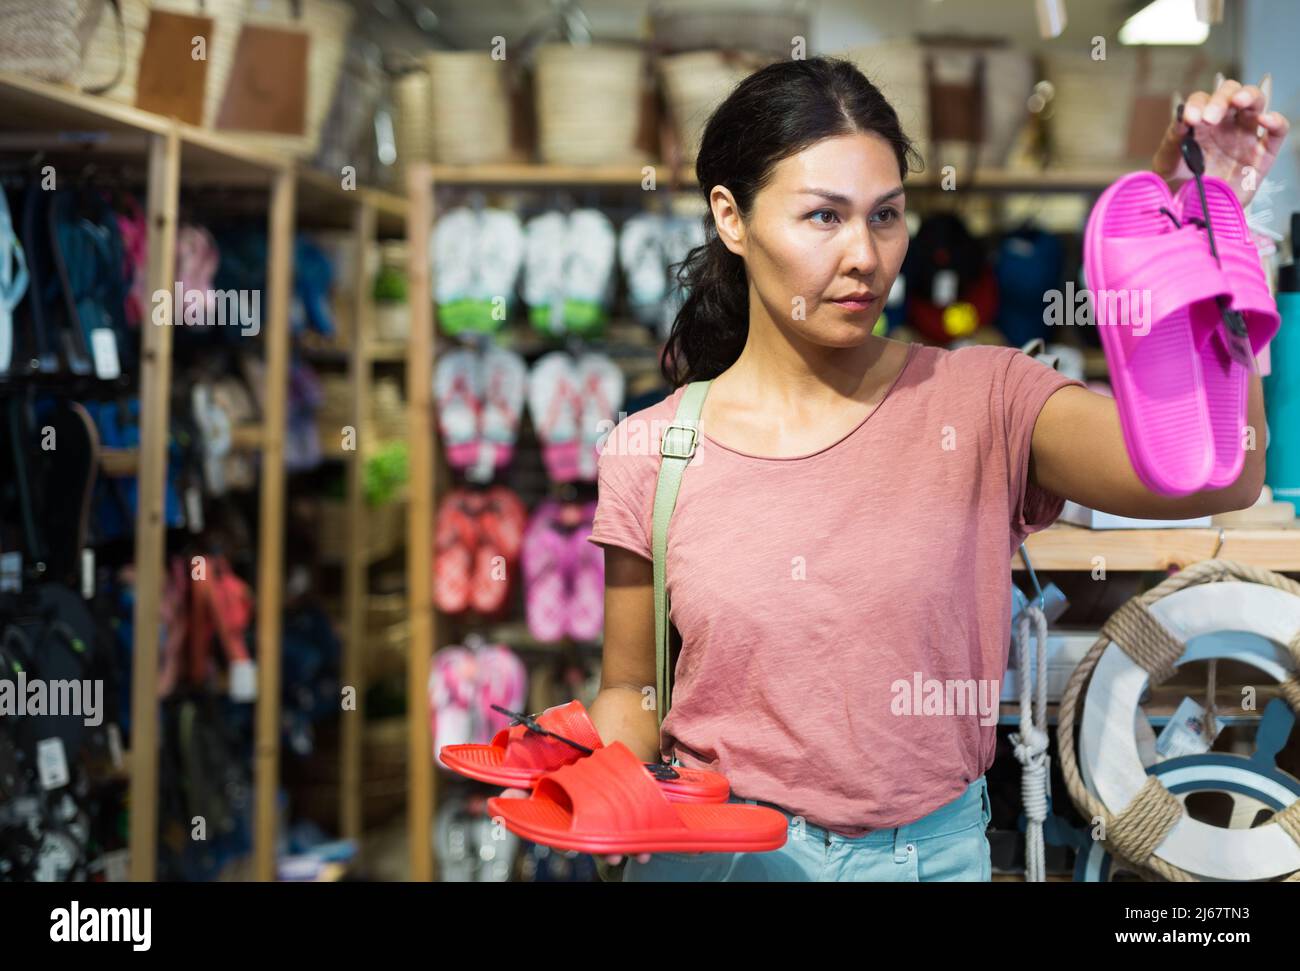 Female shopper chooses beach flip flops at hardware store Stock Photo